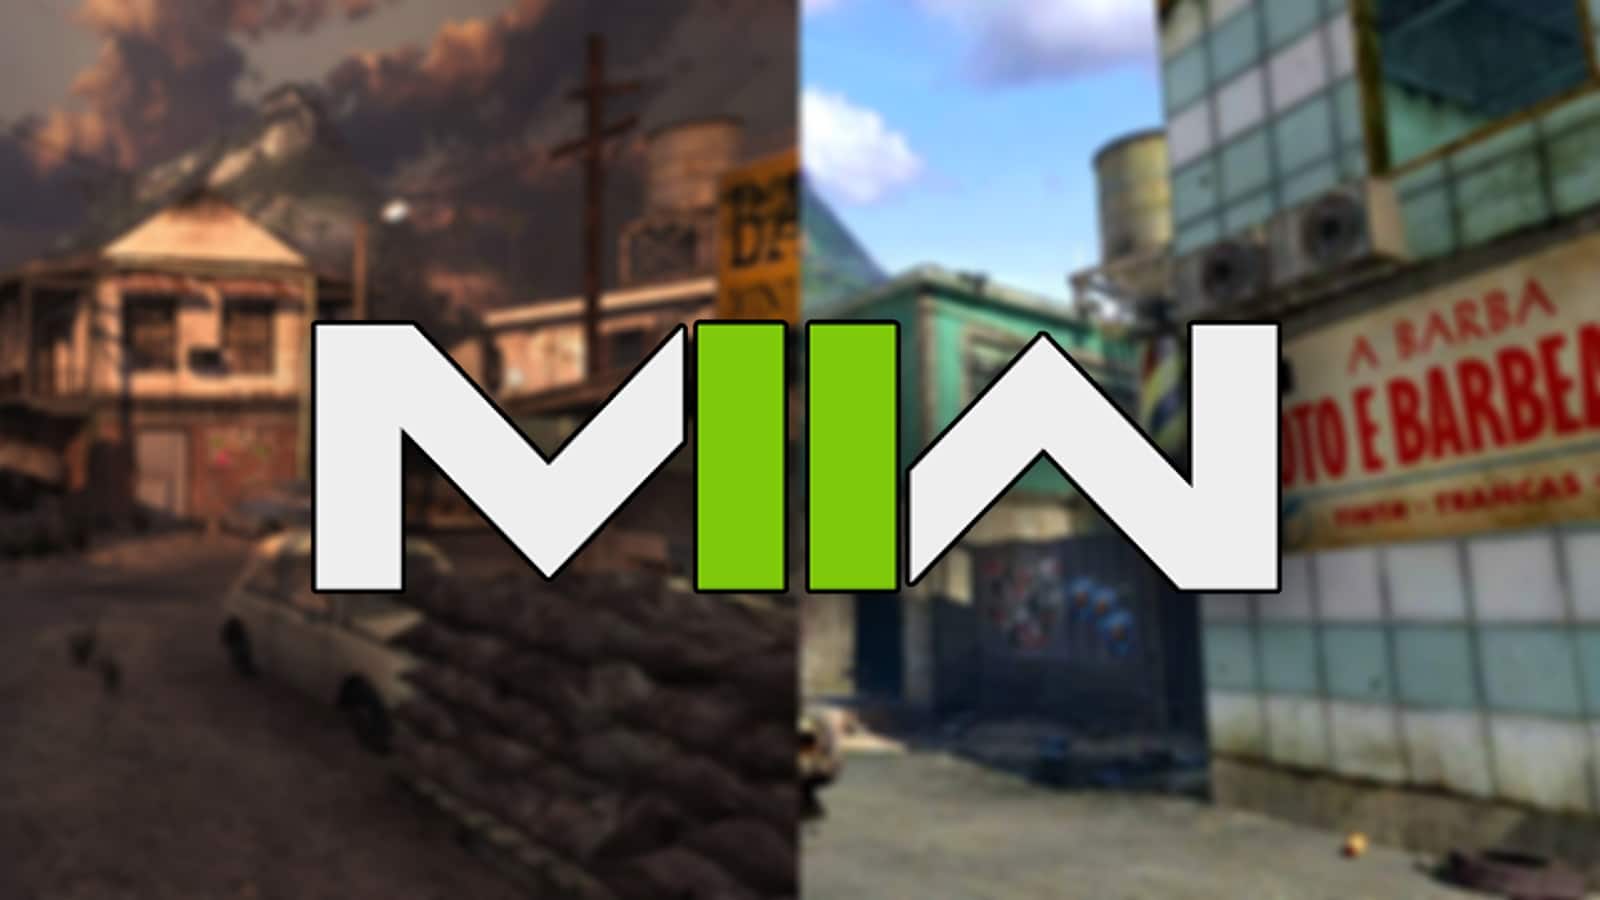 Modern Warfare 2 maps Rundown and Favela with MWII 2022 logo